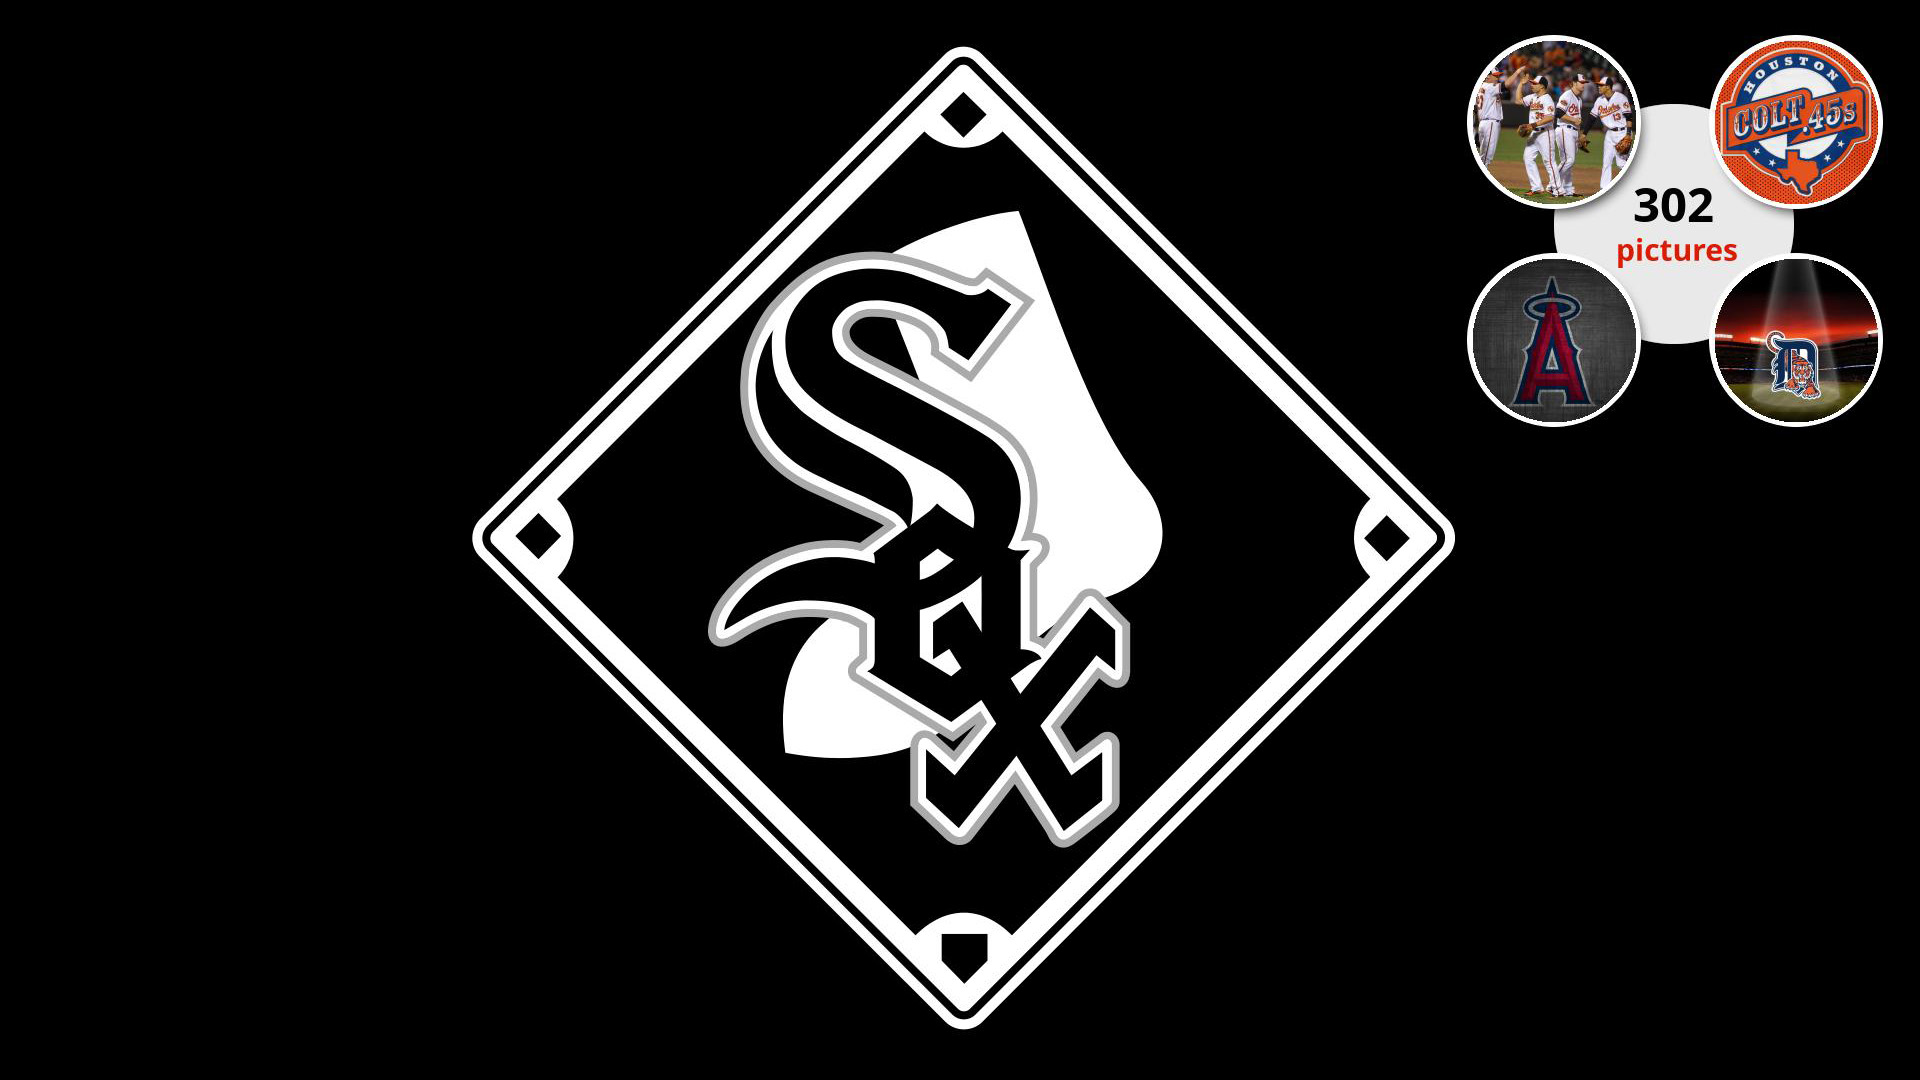 Chicago White Sox Wallpaper HD | PixelsTalk.Net1920 x 1080